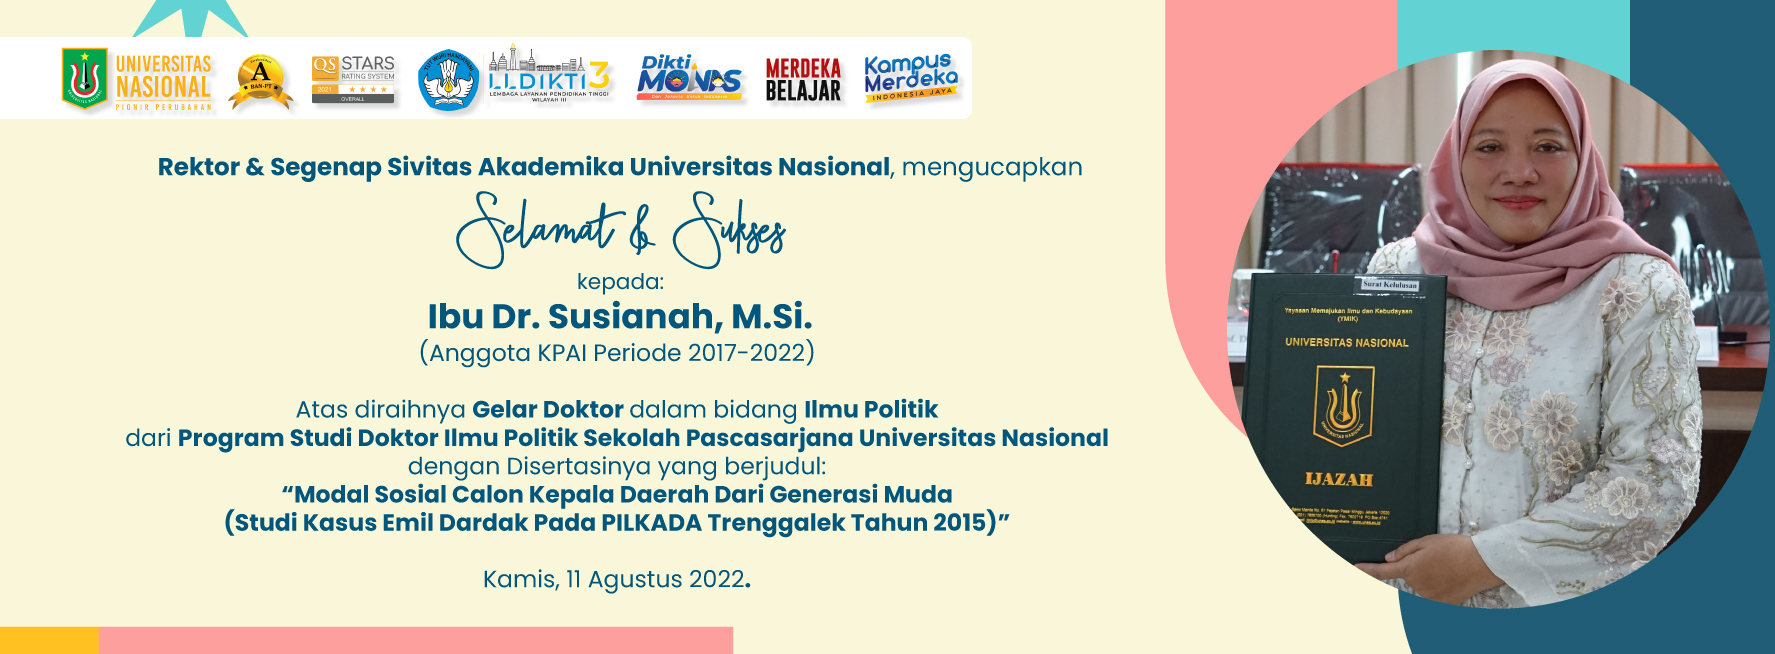 Selamat dan Sukses Kepada Ibu Dr. Susianah, M.Si., Atas Diraihnya Gelar Doktor Ilmu Politik